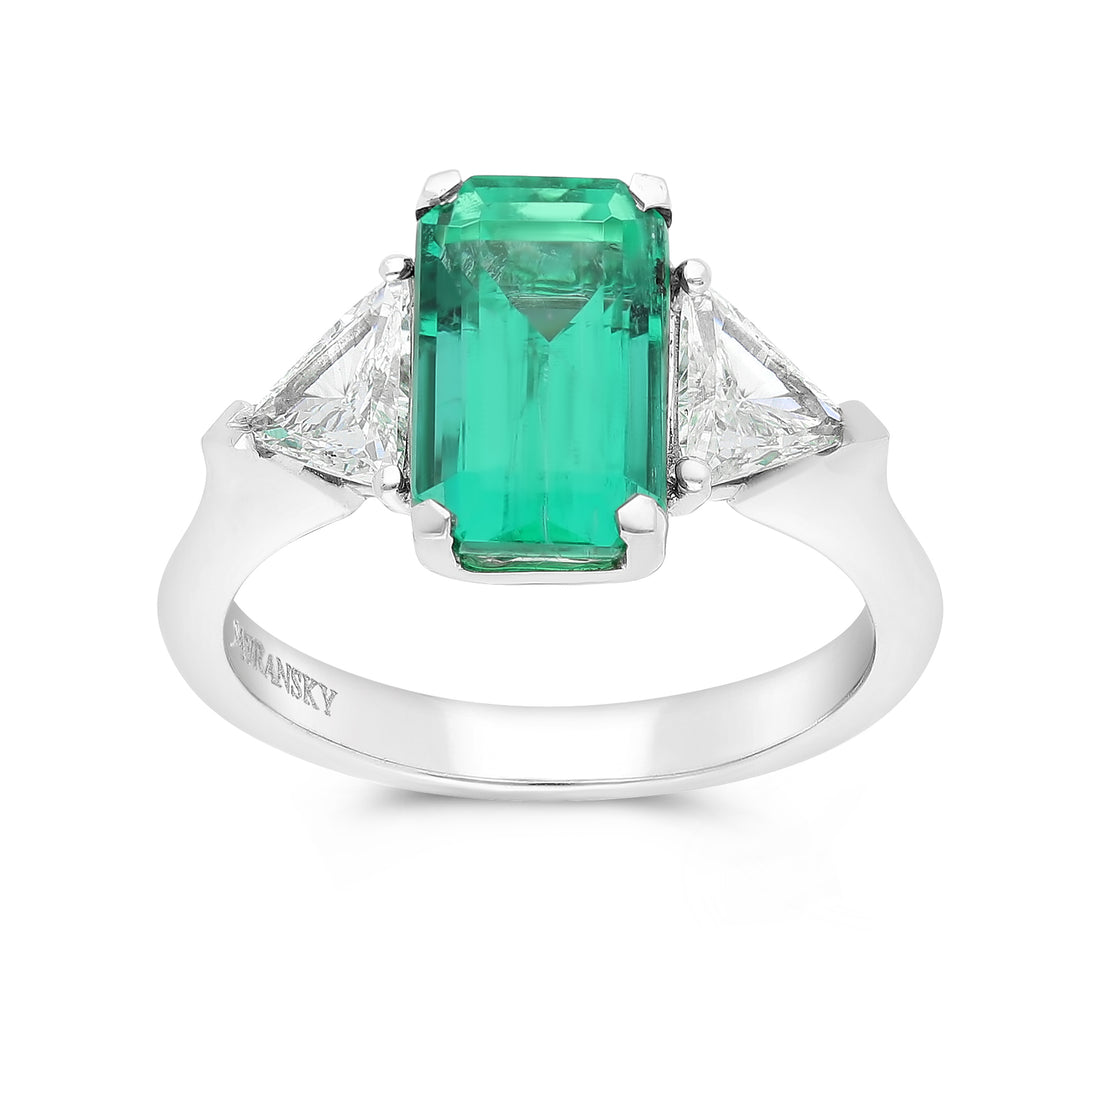 Elongated Emerald Cut Trillion Birthstone Ring - 3.95 Carat